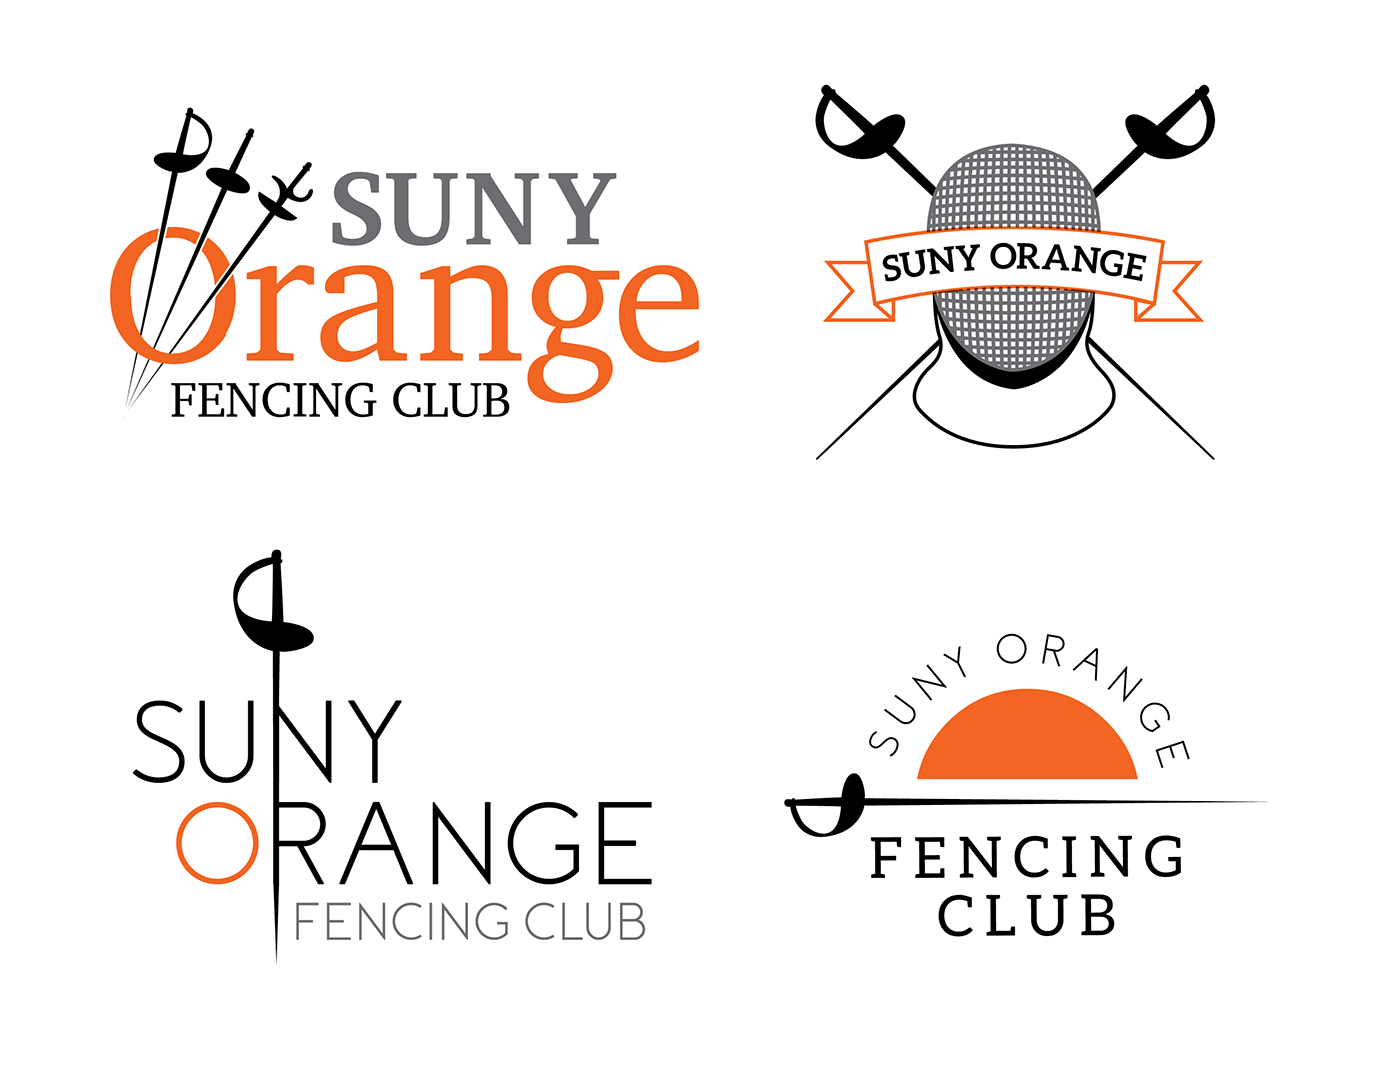 SUNY Orange Logo - SUNY Orange Fencing Club Identity on Behance